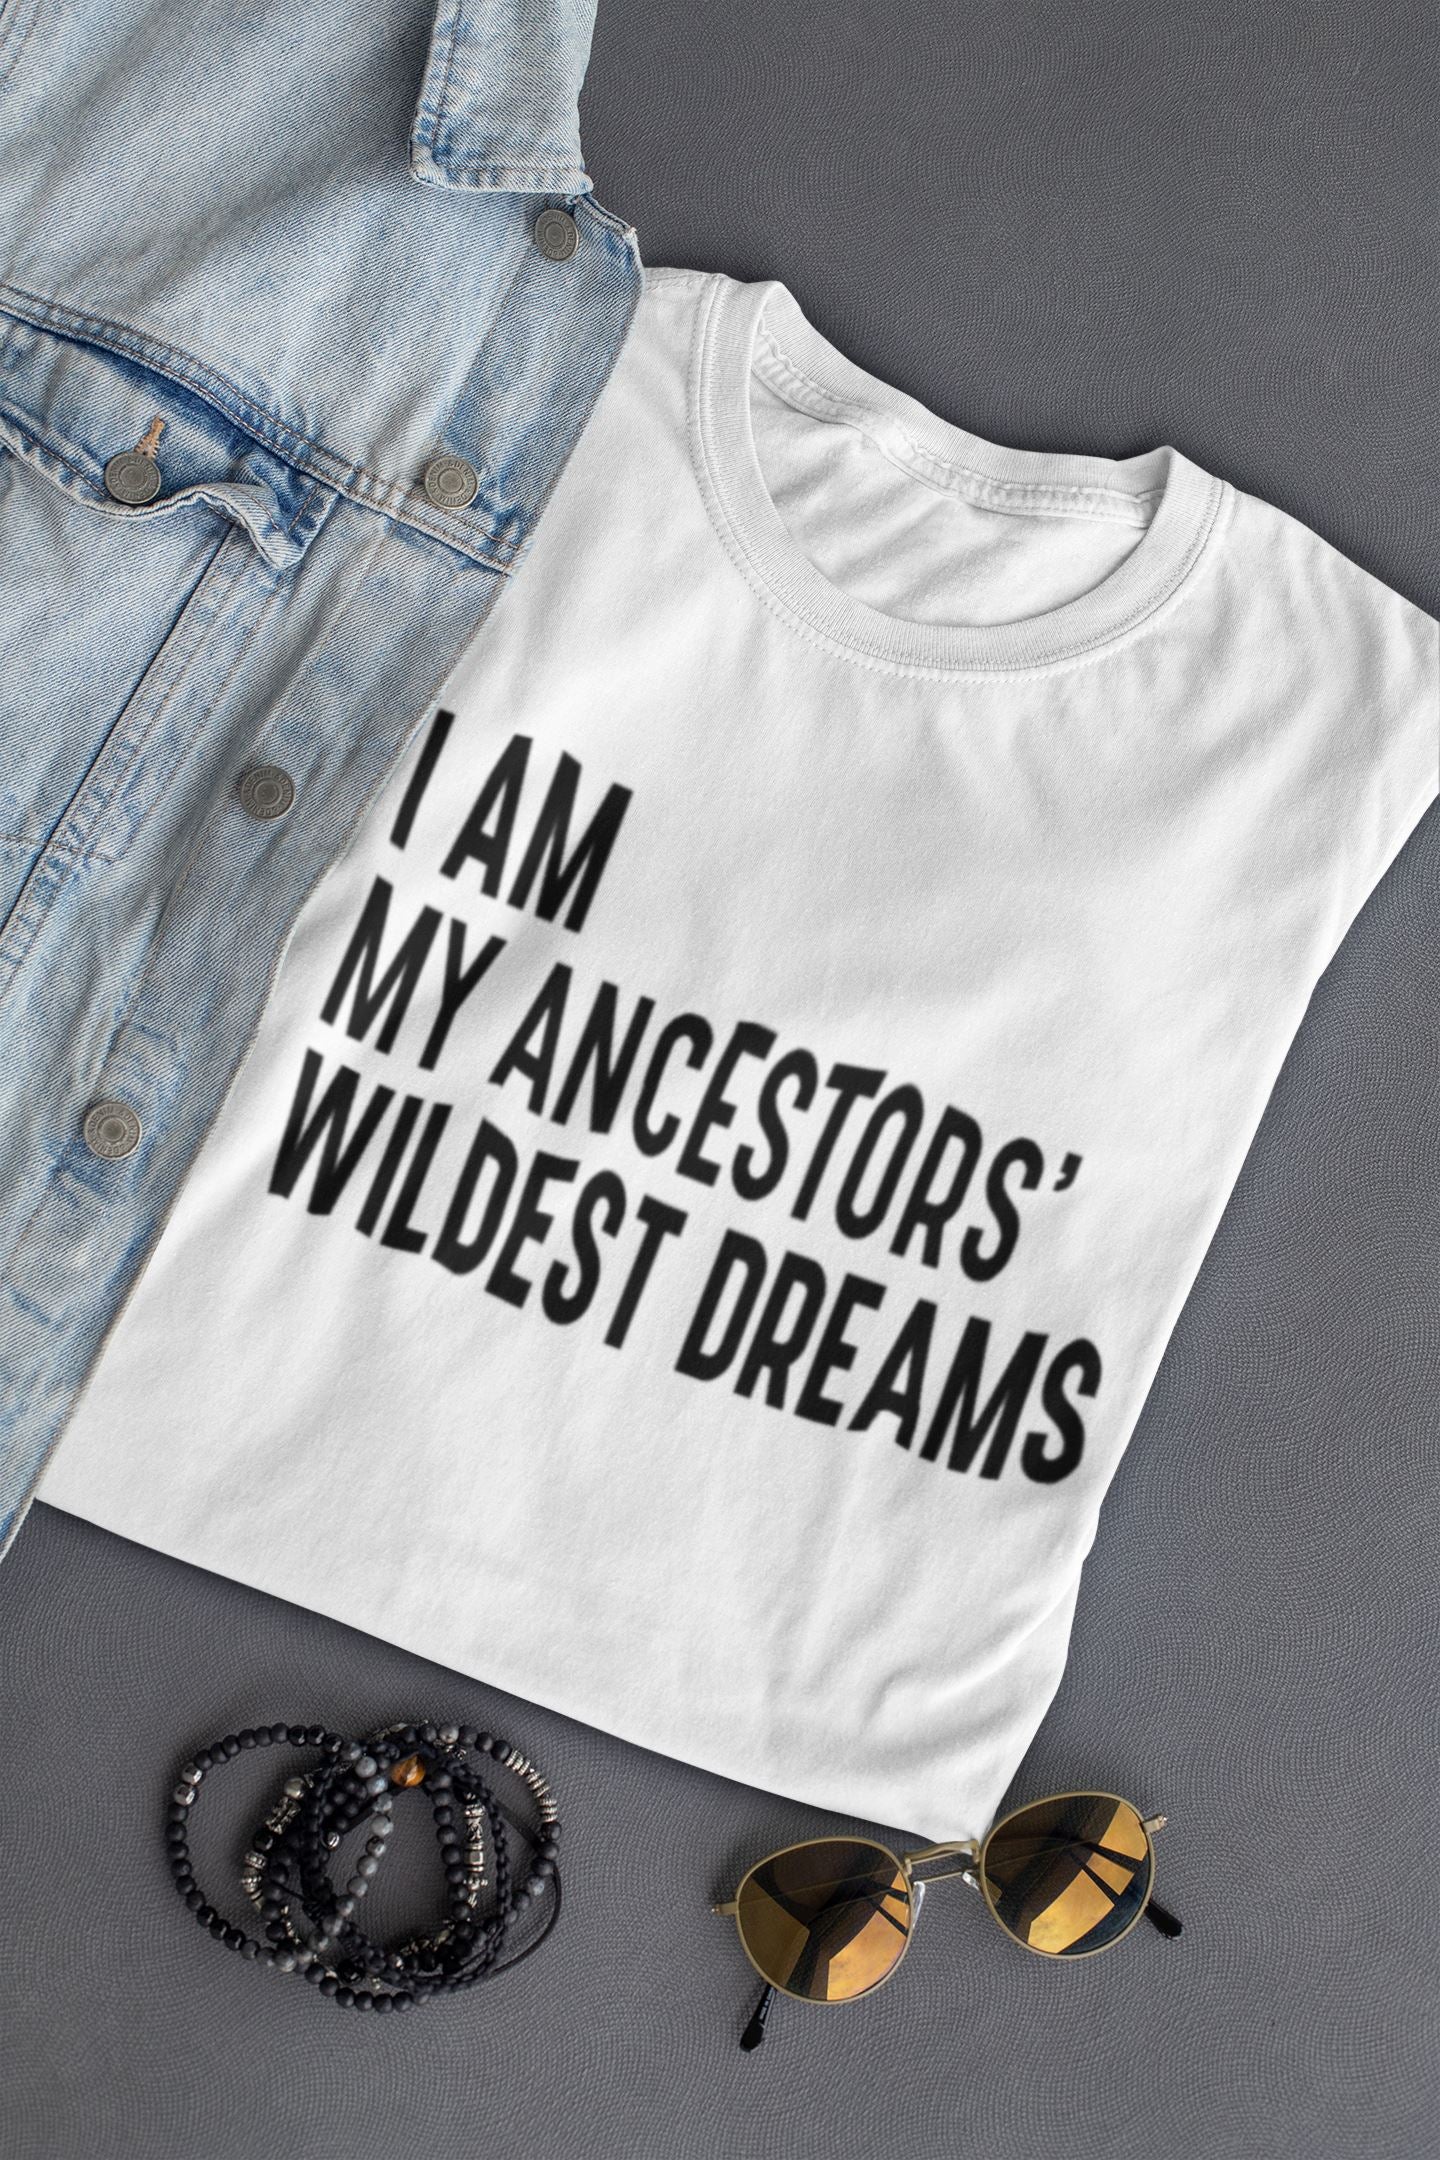 I Am My Ancestors' Wildest Dreams T-Shirt, Black Pride, Black Excellence, Black History B1ack By Design LLC 